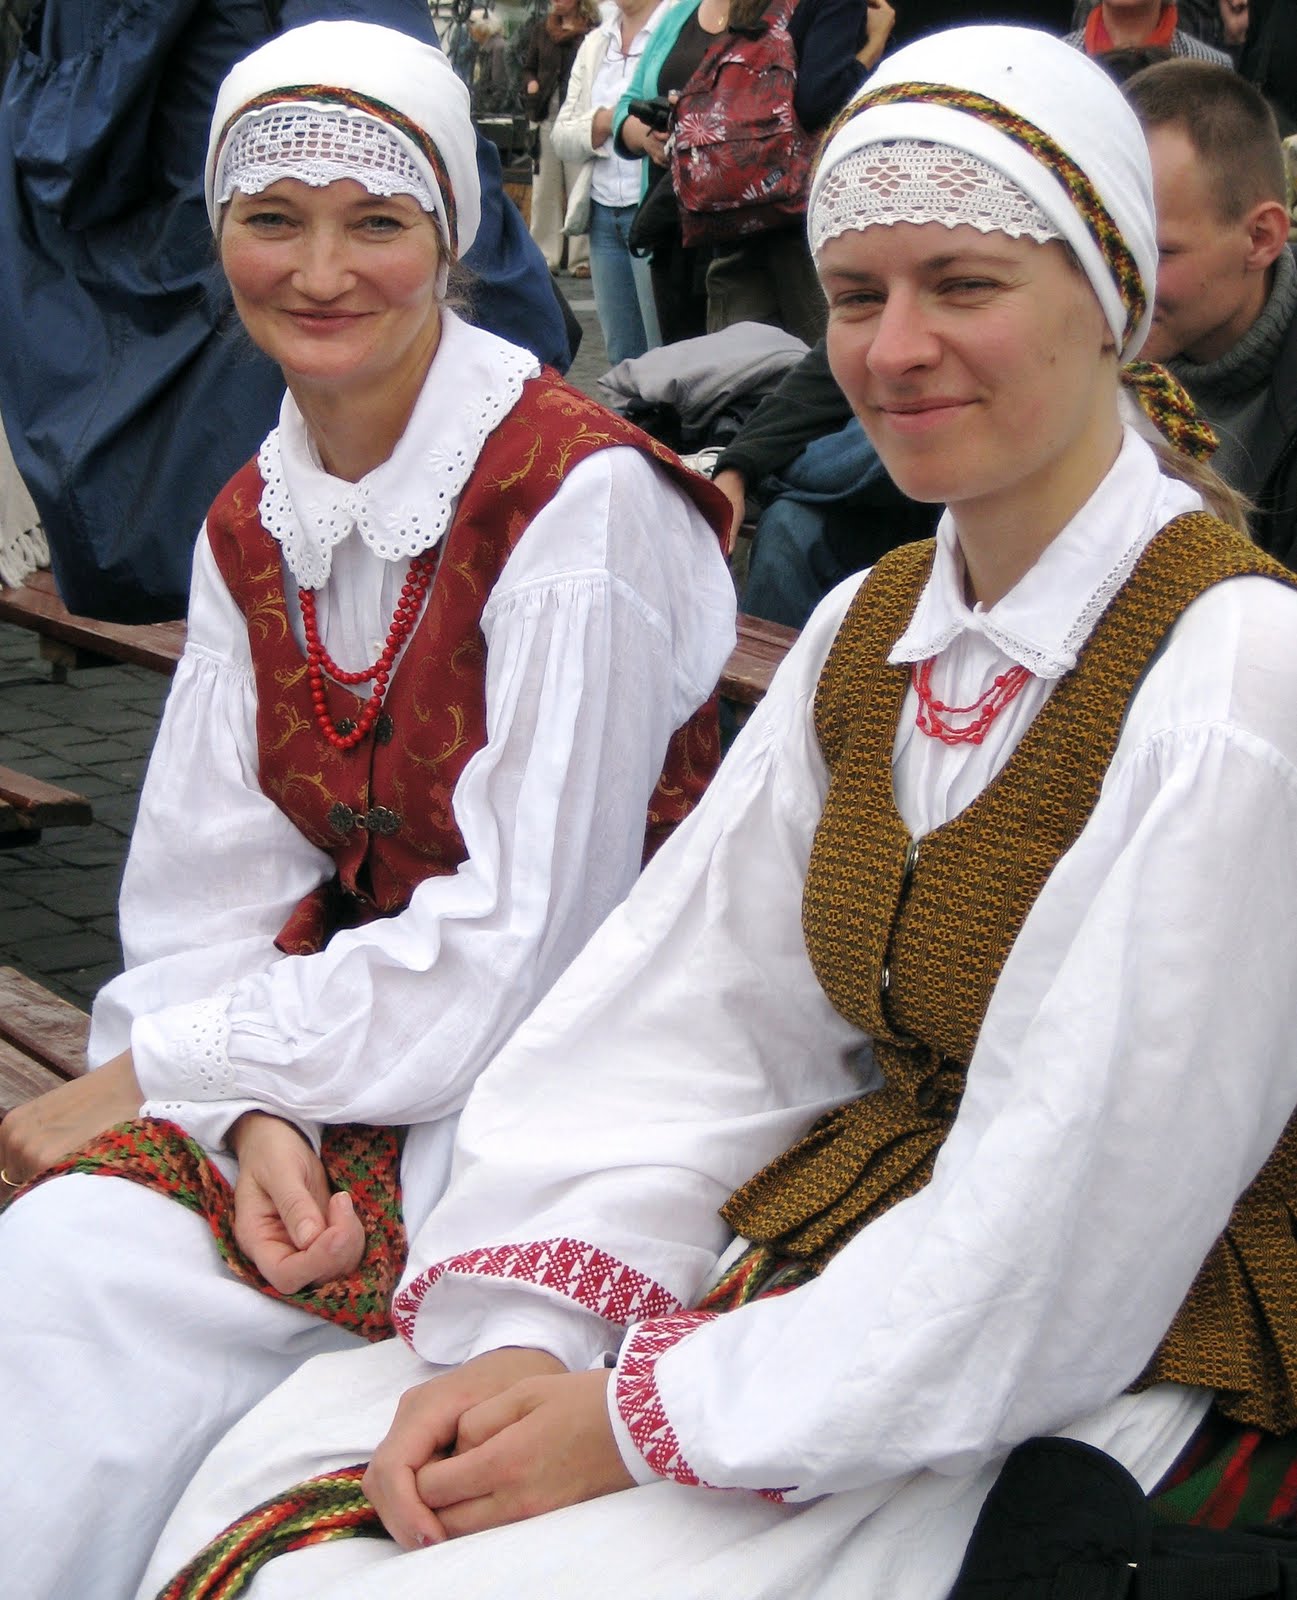 Poushos in the Baltics: Vilnius, Lithuania